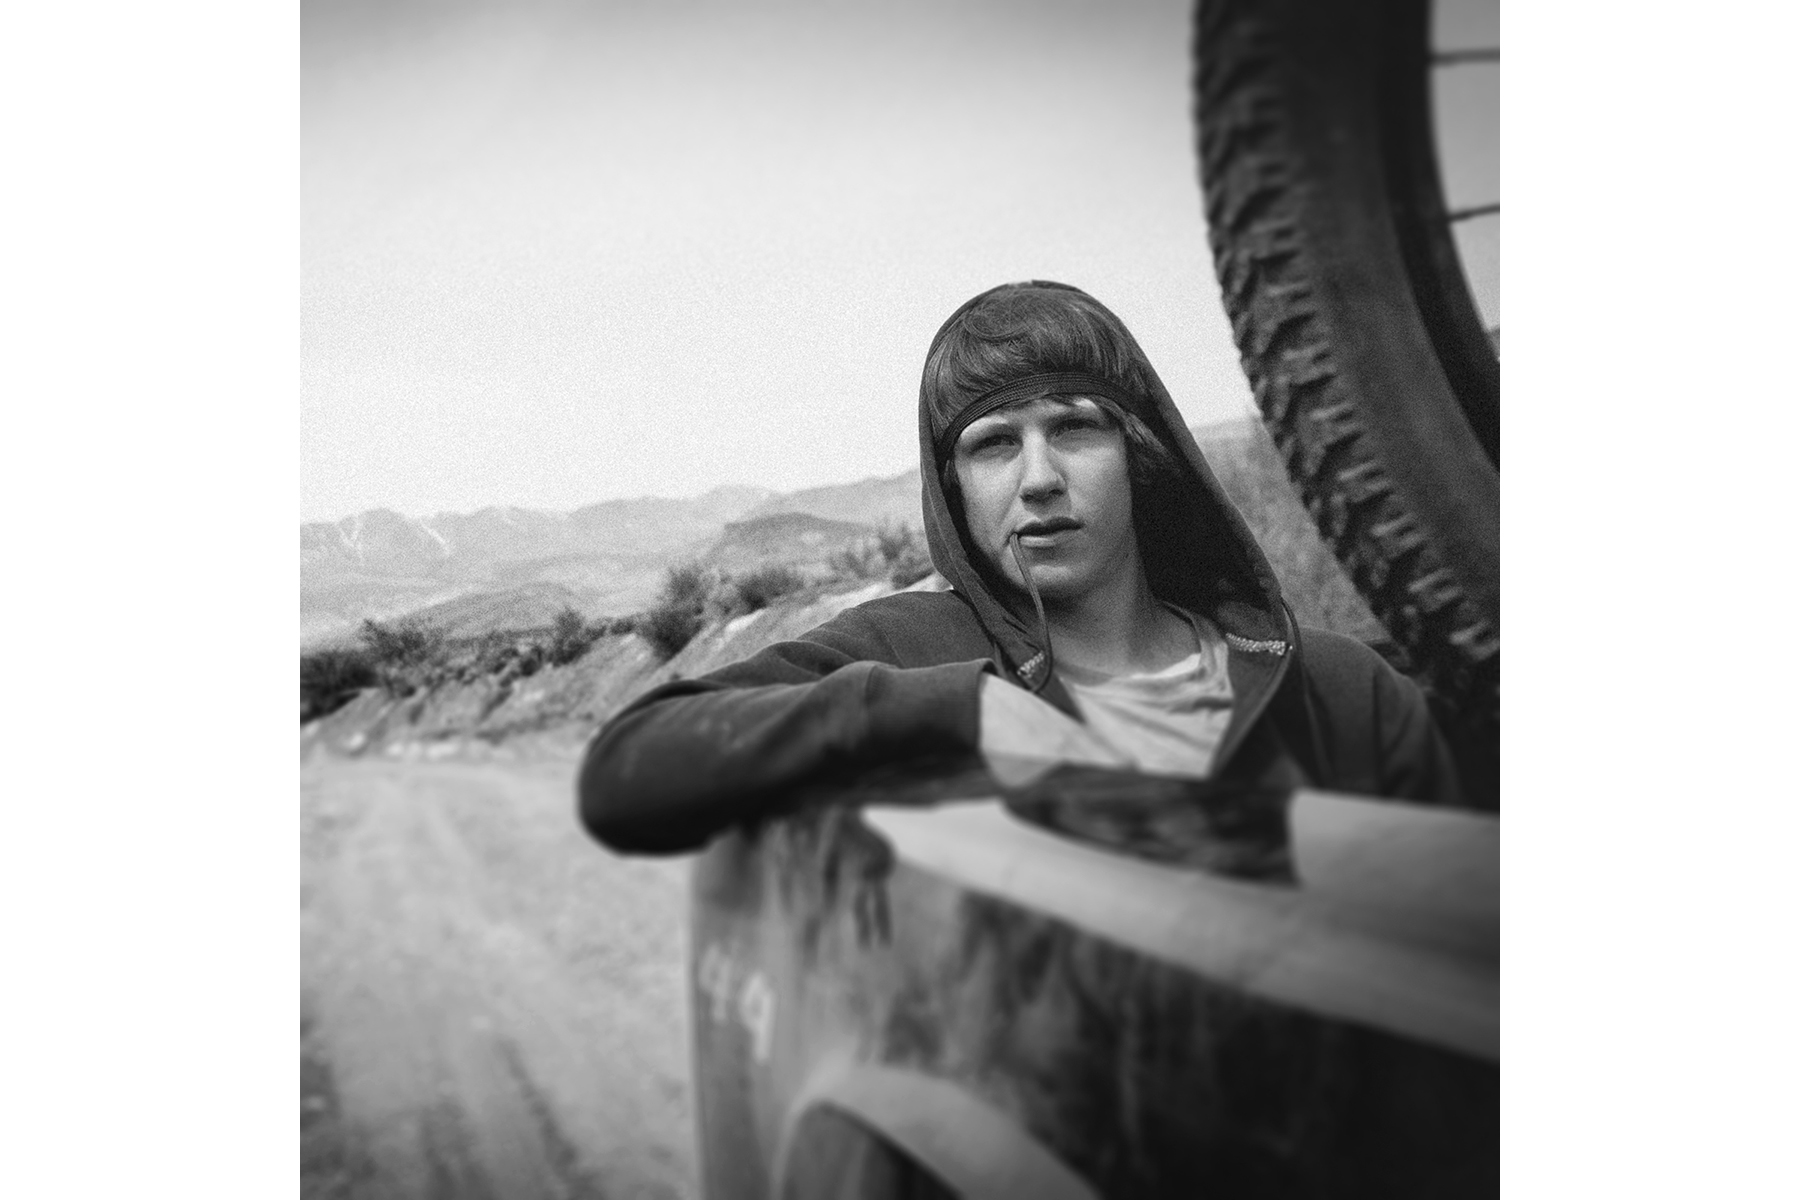  Brandon Semenuk portrait lifestyle photo scouting in Utah 